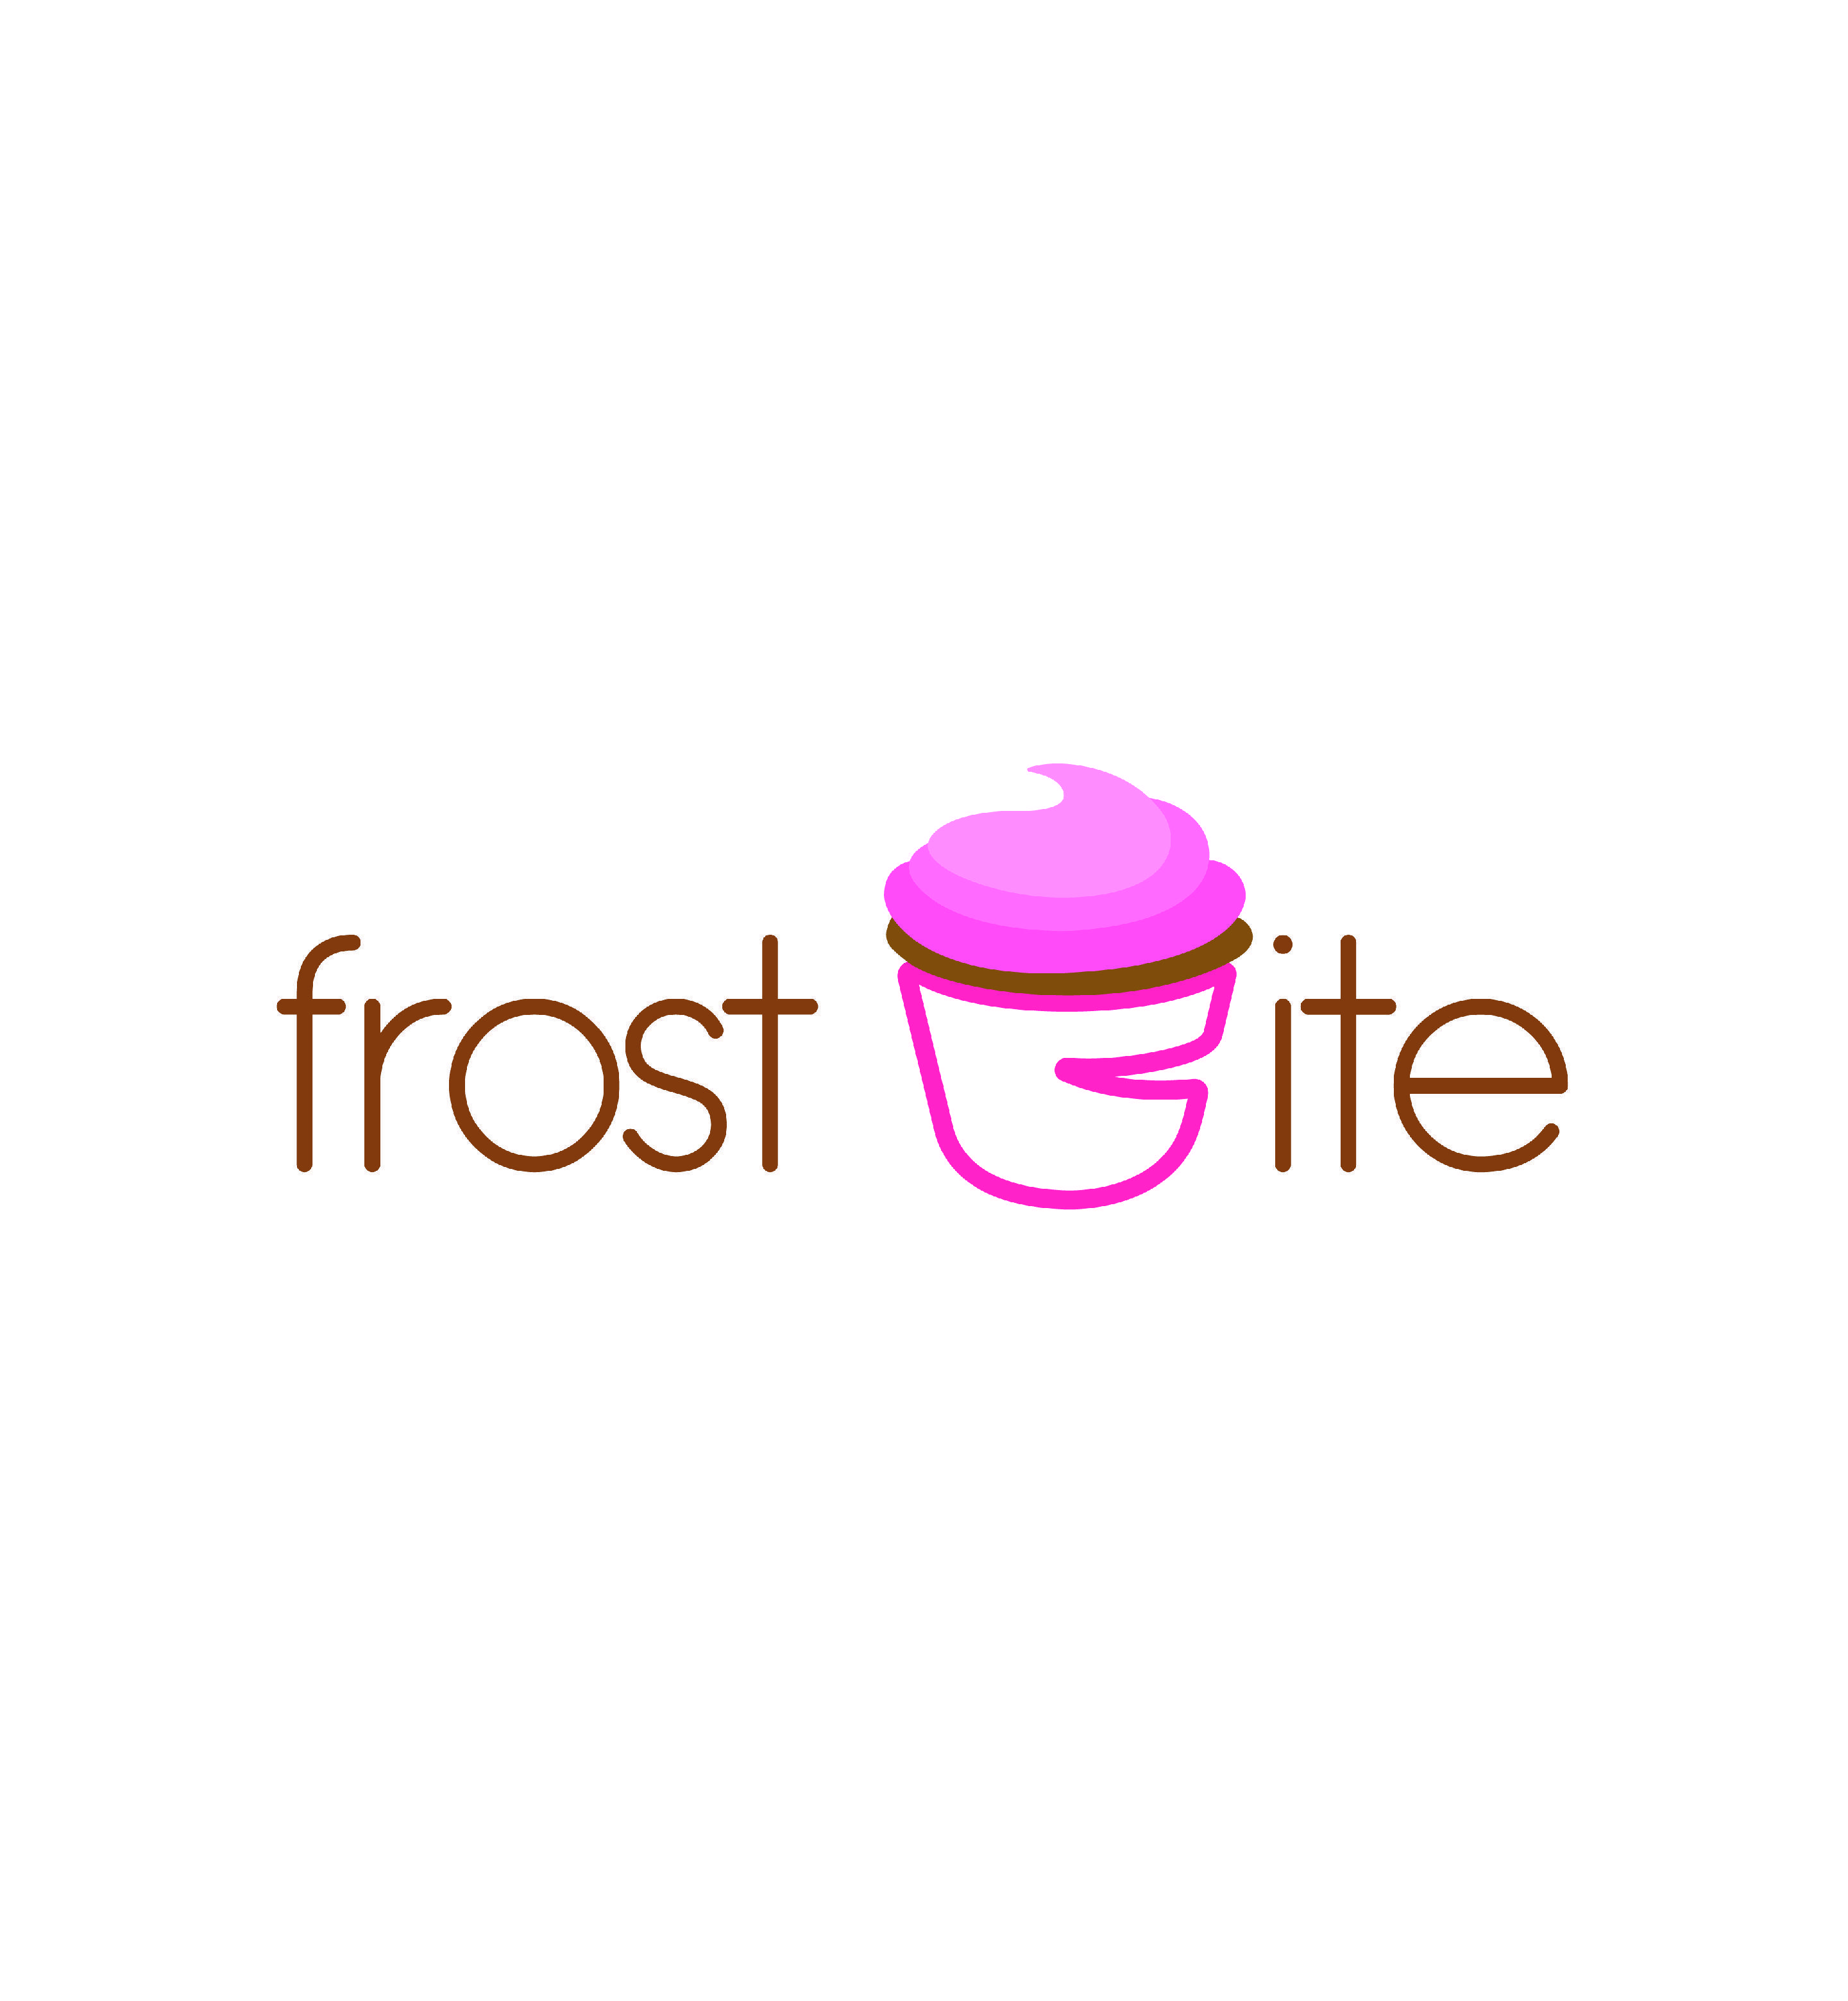 Frostbite Logo - FrostBite